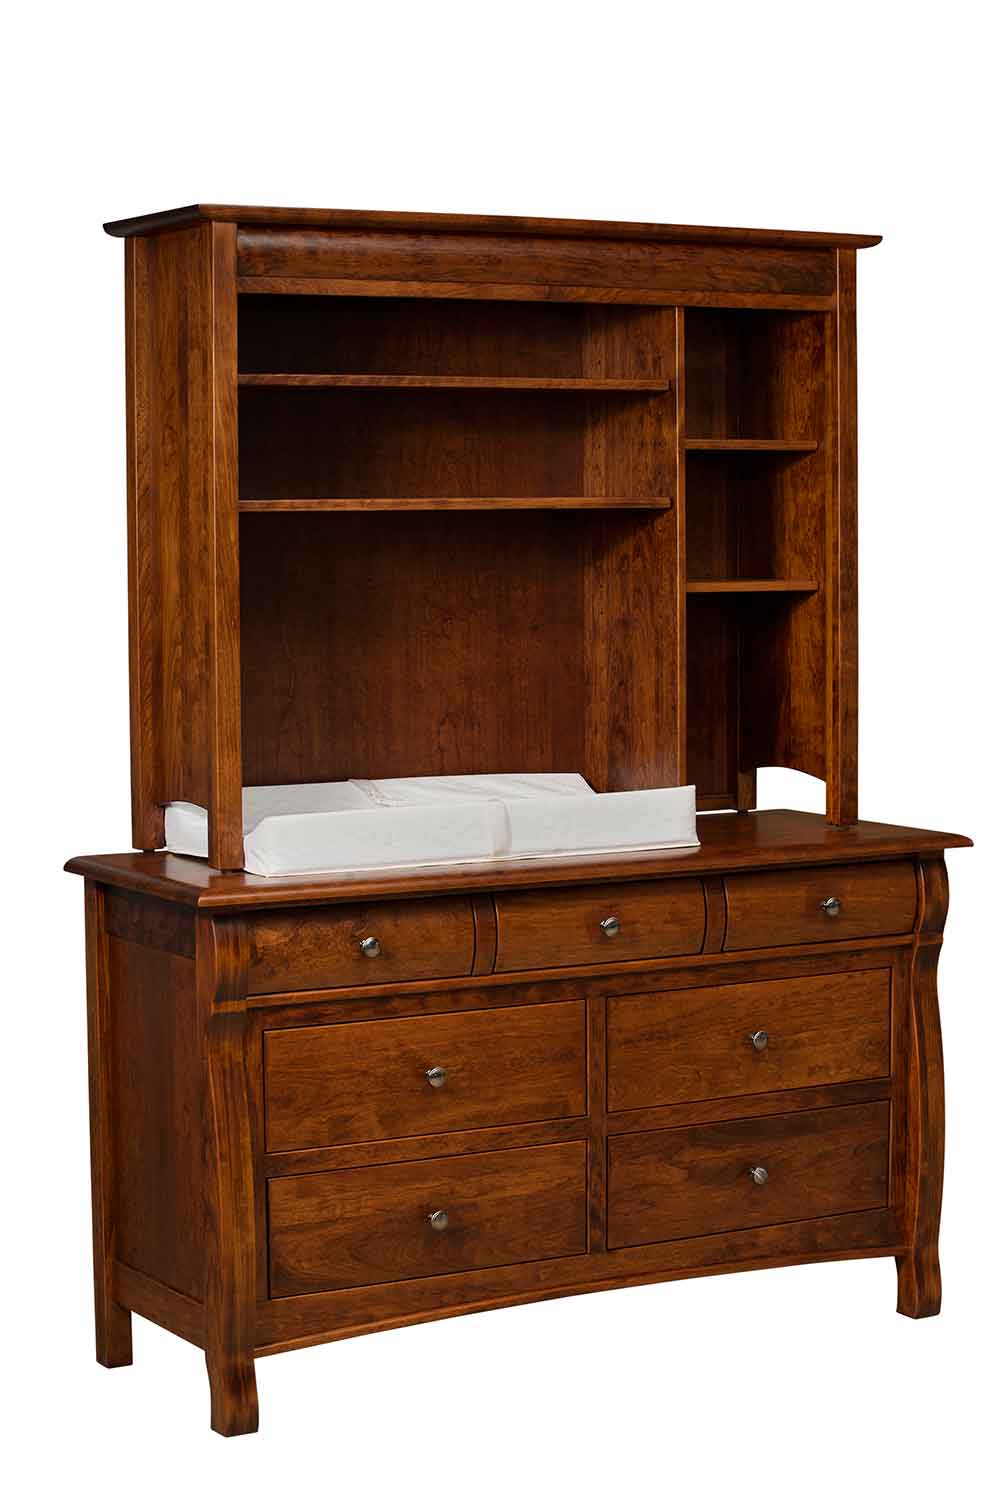 Castlebury-7-Drawer-Dresser-with-Hutch-Top-OTO.jpg